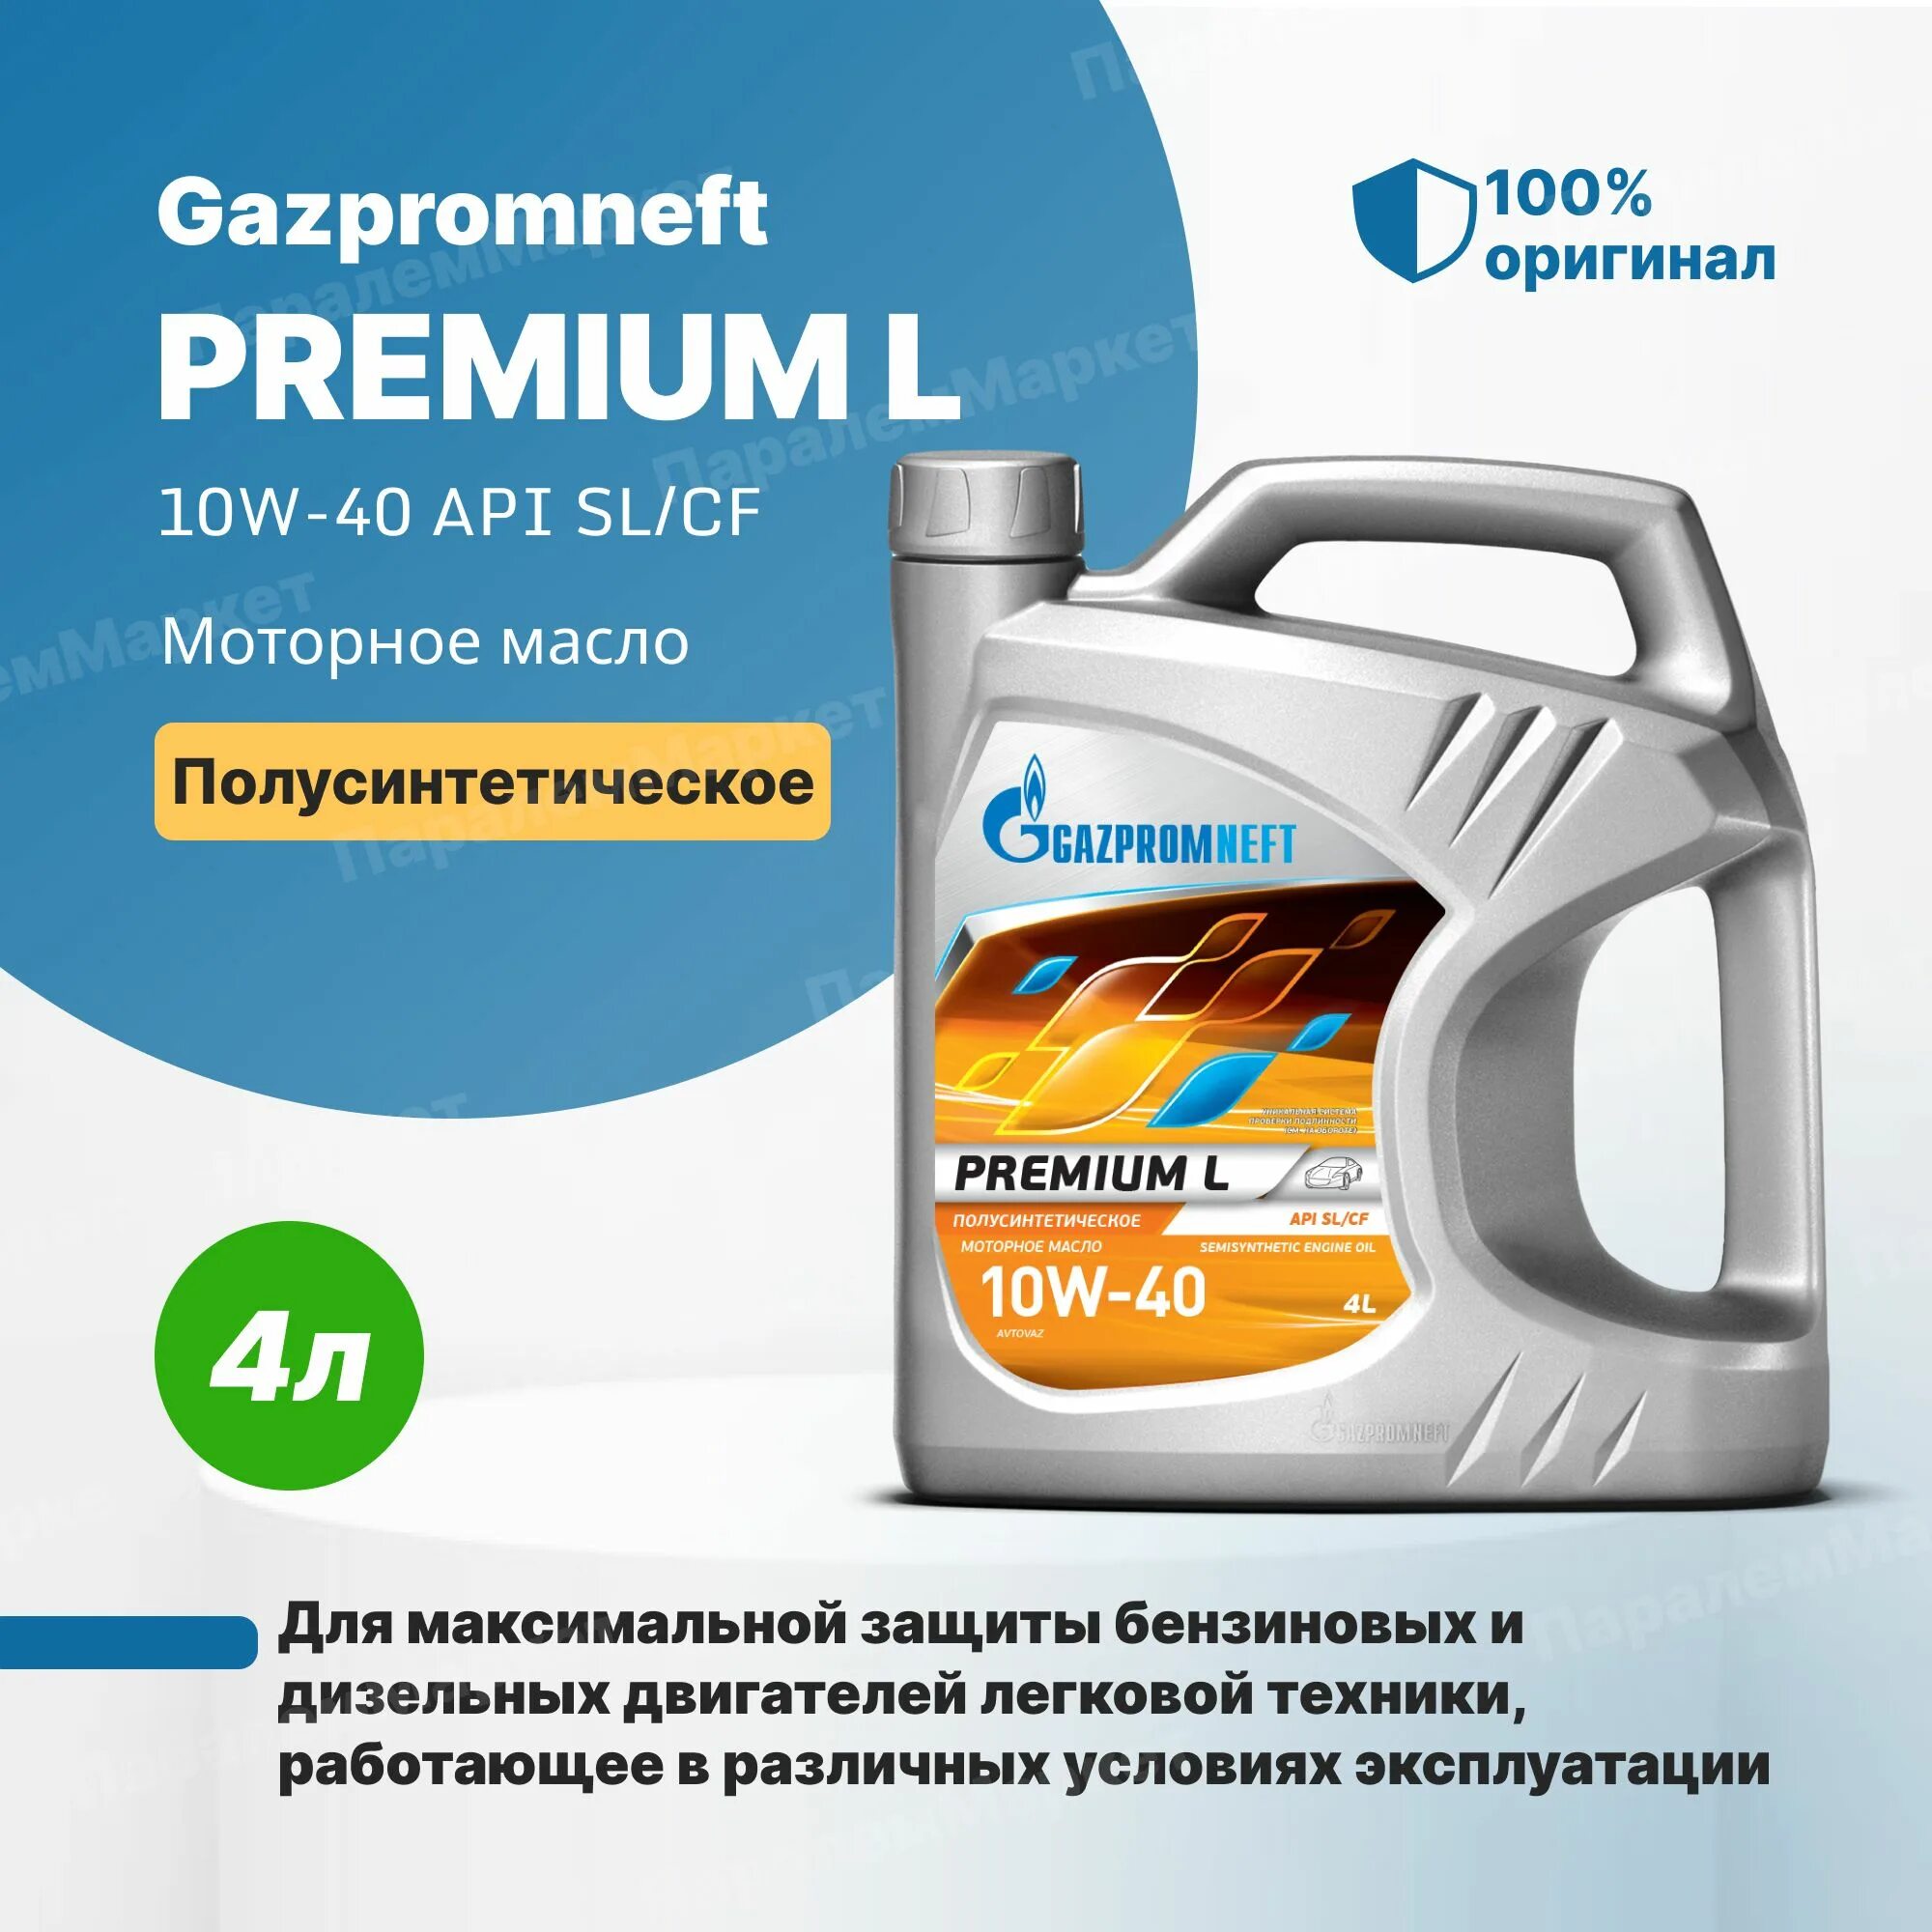 Gazpromneft масло моторное Premium l 10w-40 полусинтетическое 4 л. Газпромнефть премиум л 10w-40. Масло Газпромнефть 10w 40 премиум л. Масло газпромнефть премиум 10w 40